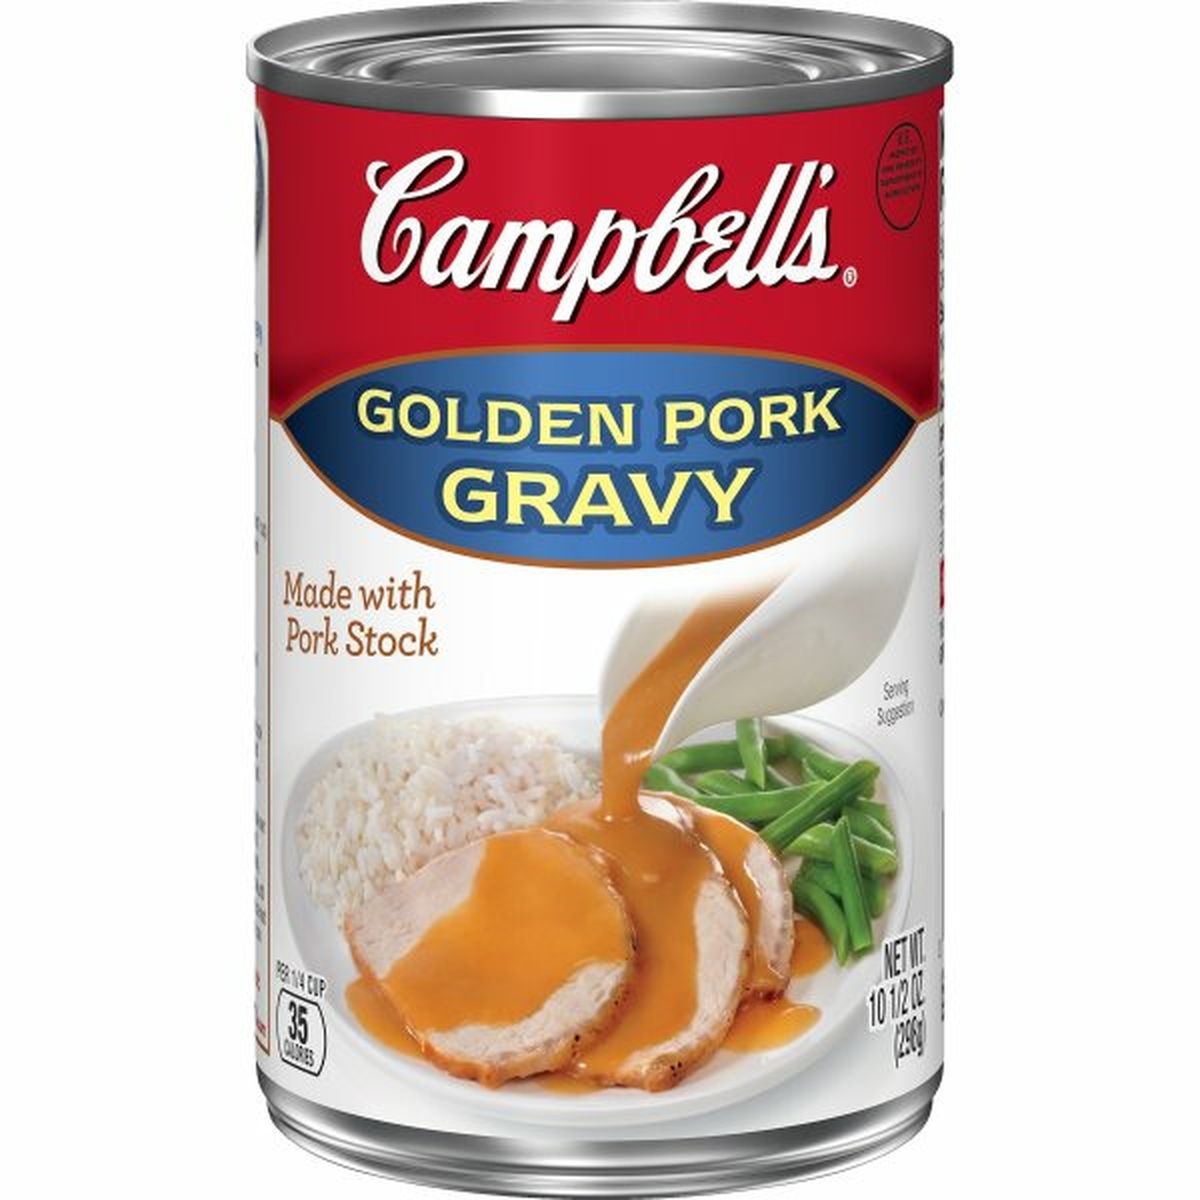 Calories in Campbell'ss Golden Pork Gravy